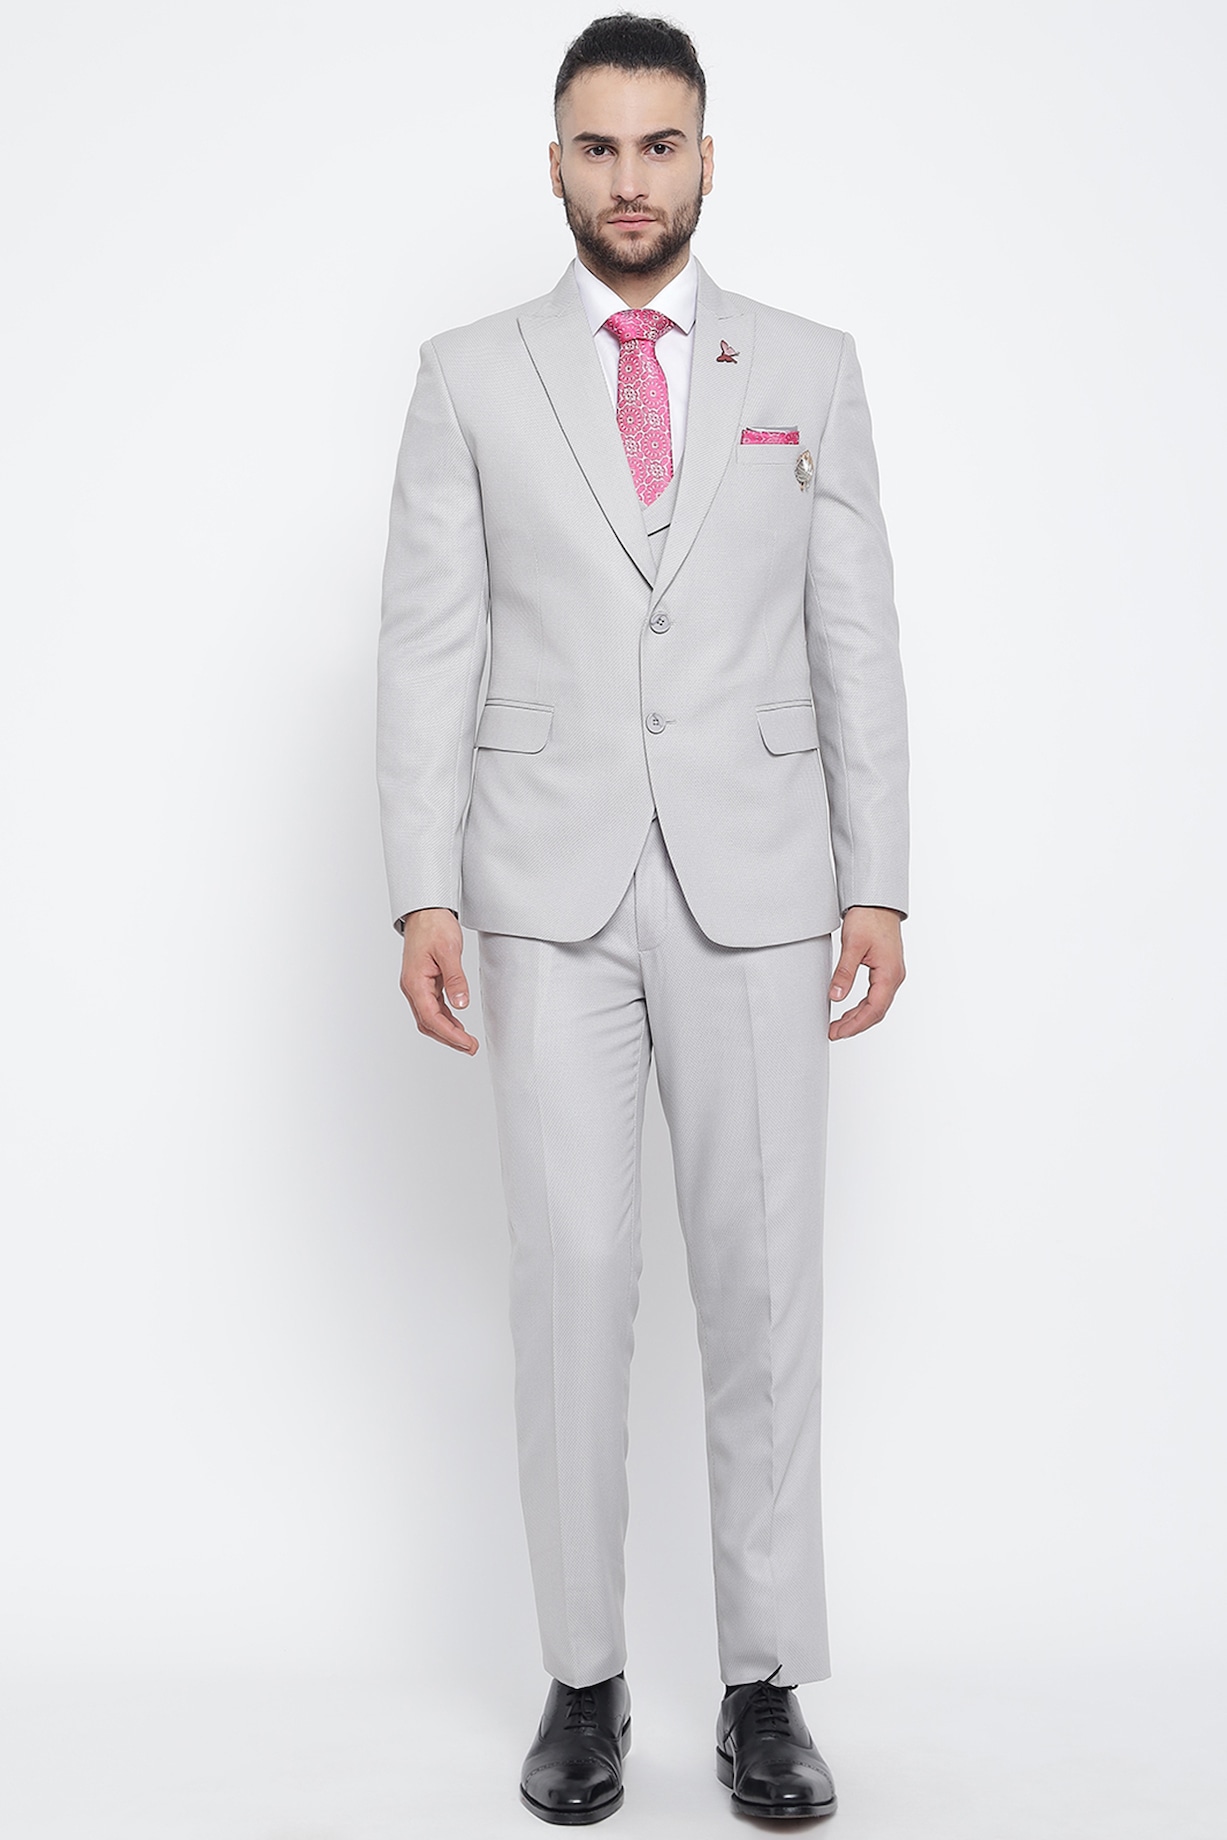 Melange Grey Suit Set With Tie Design by Soniya G Men at Pernia's